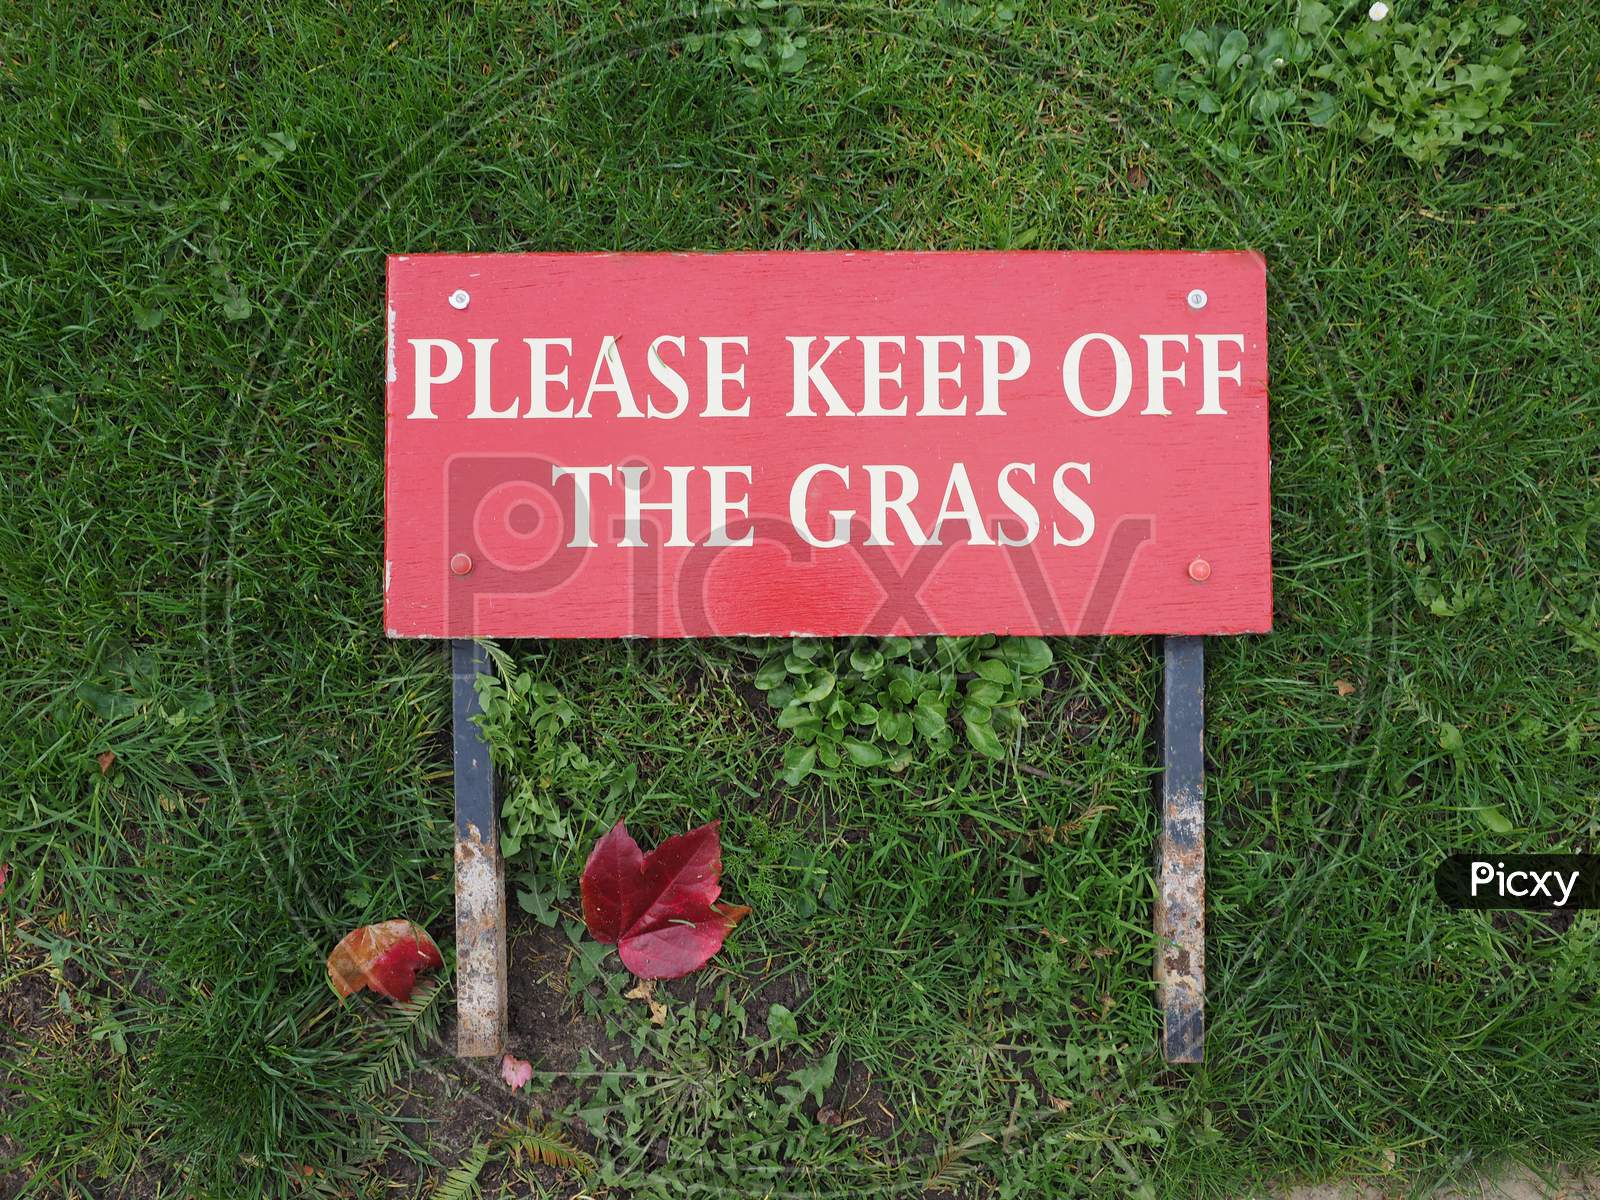 Keep Off The Grass Sign